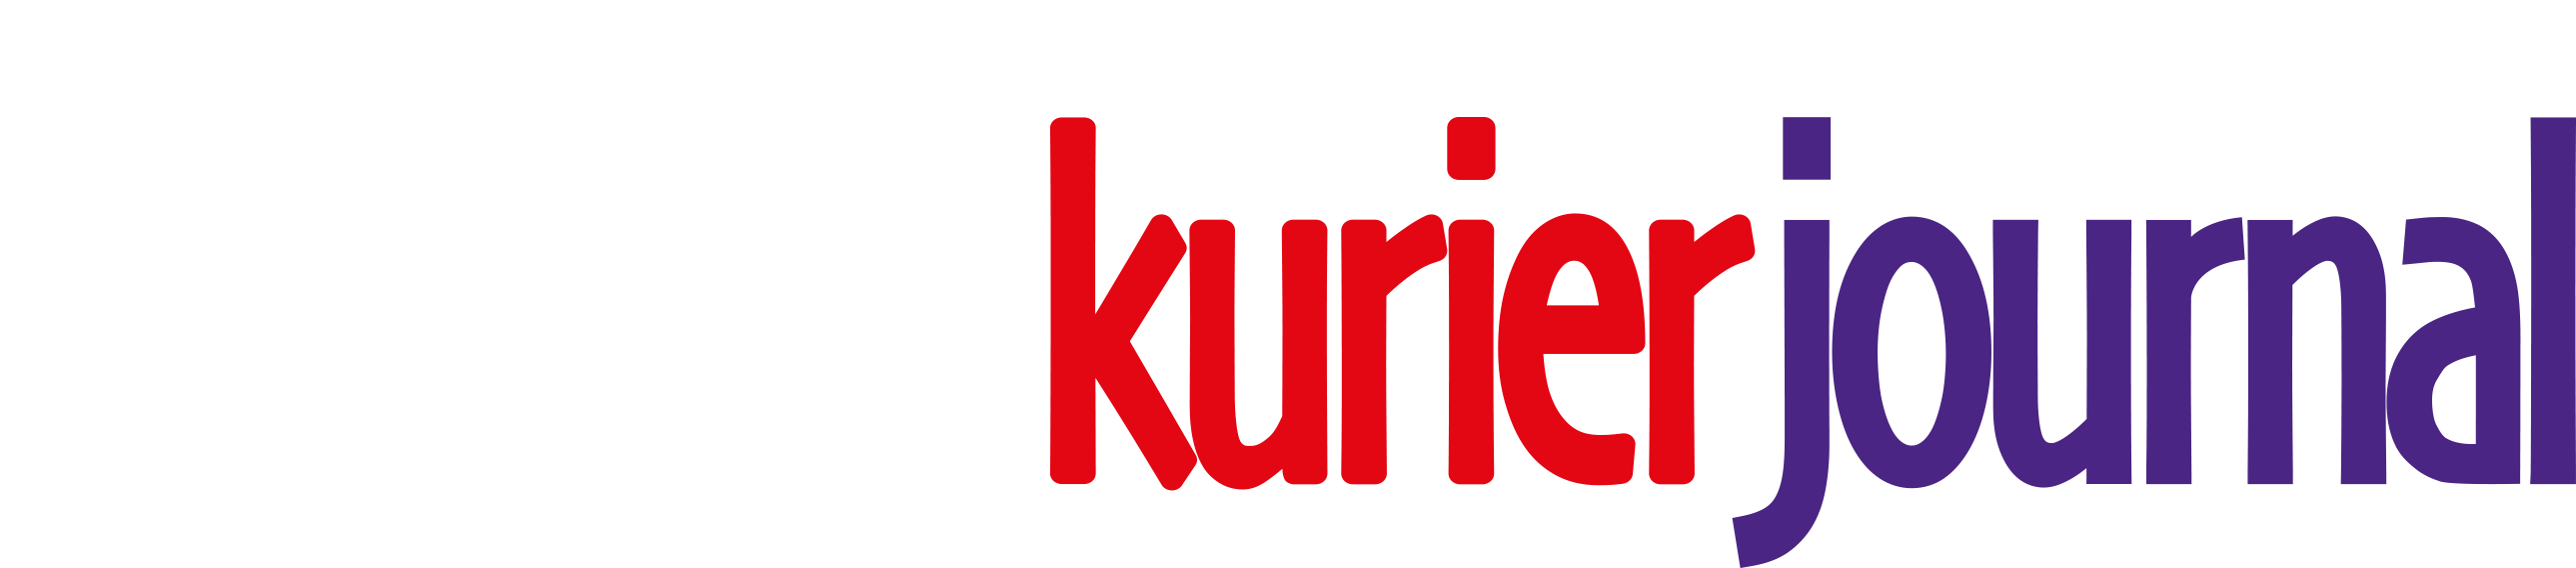 Kurier-Journal-Sidebar.png